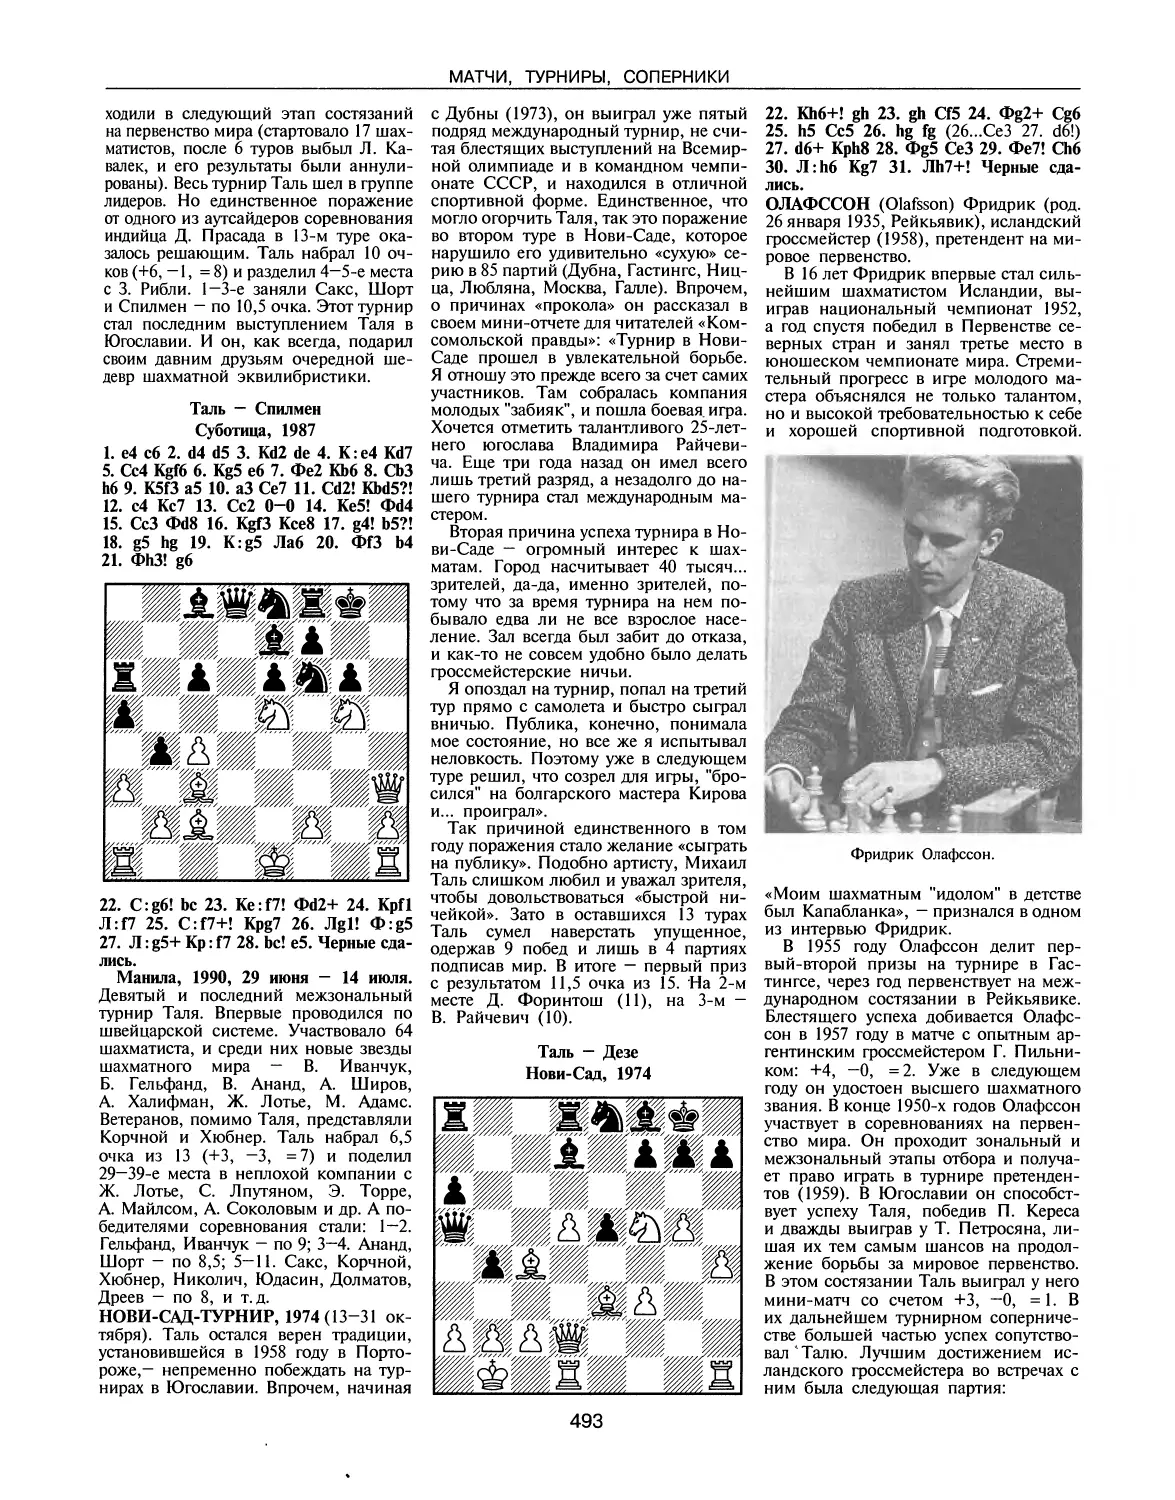 Манила, 1990
Нови-Сад-турнир, 1974
Олафссон Ф.